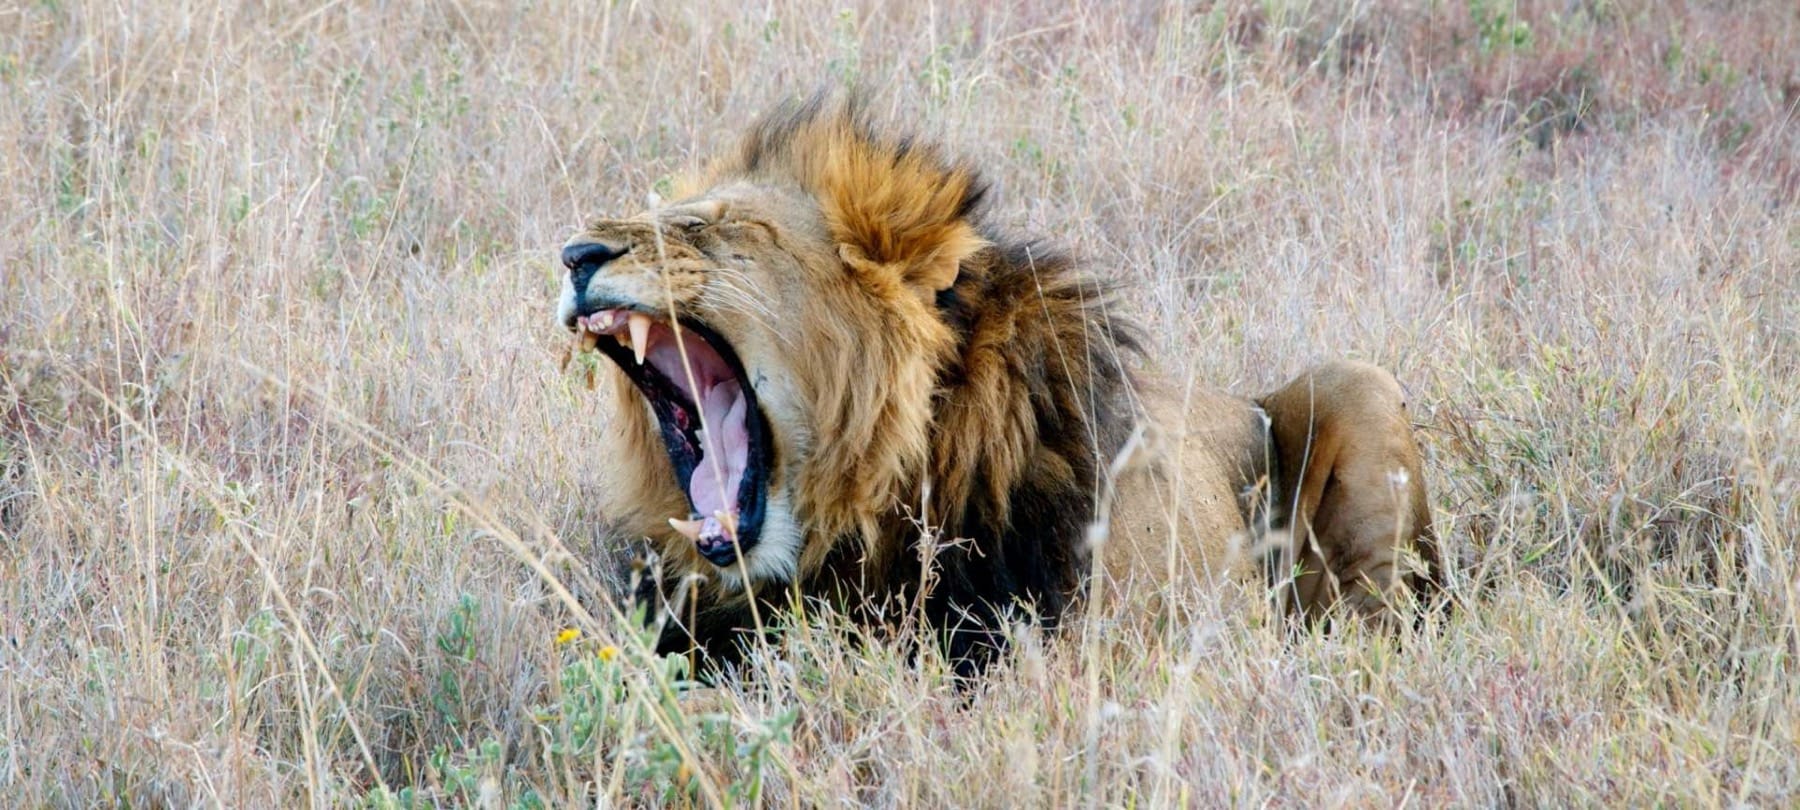 Lion in Laikipia Plateau